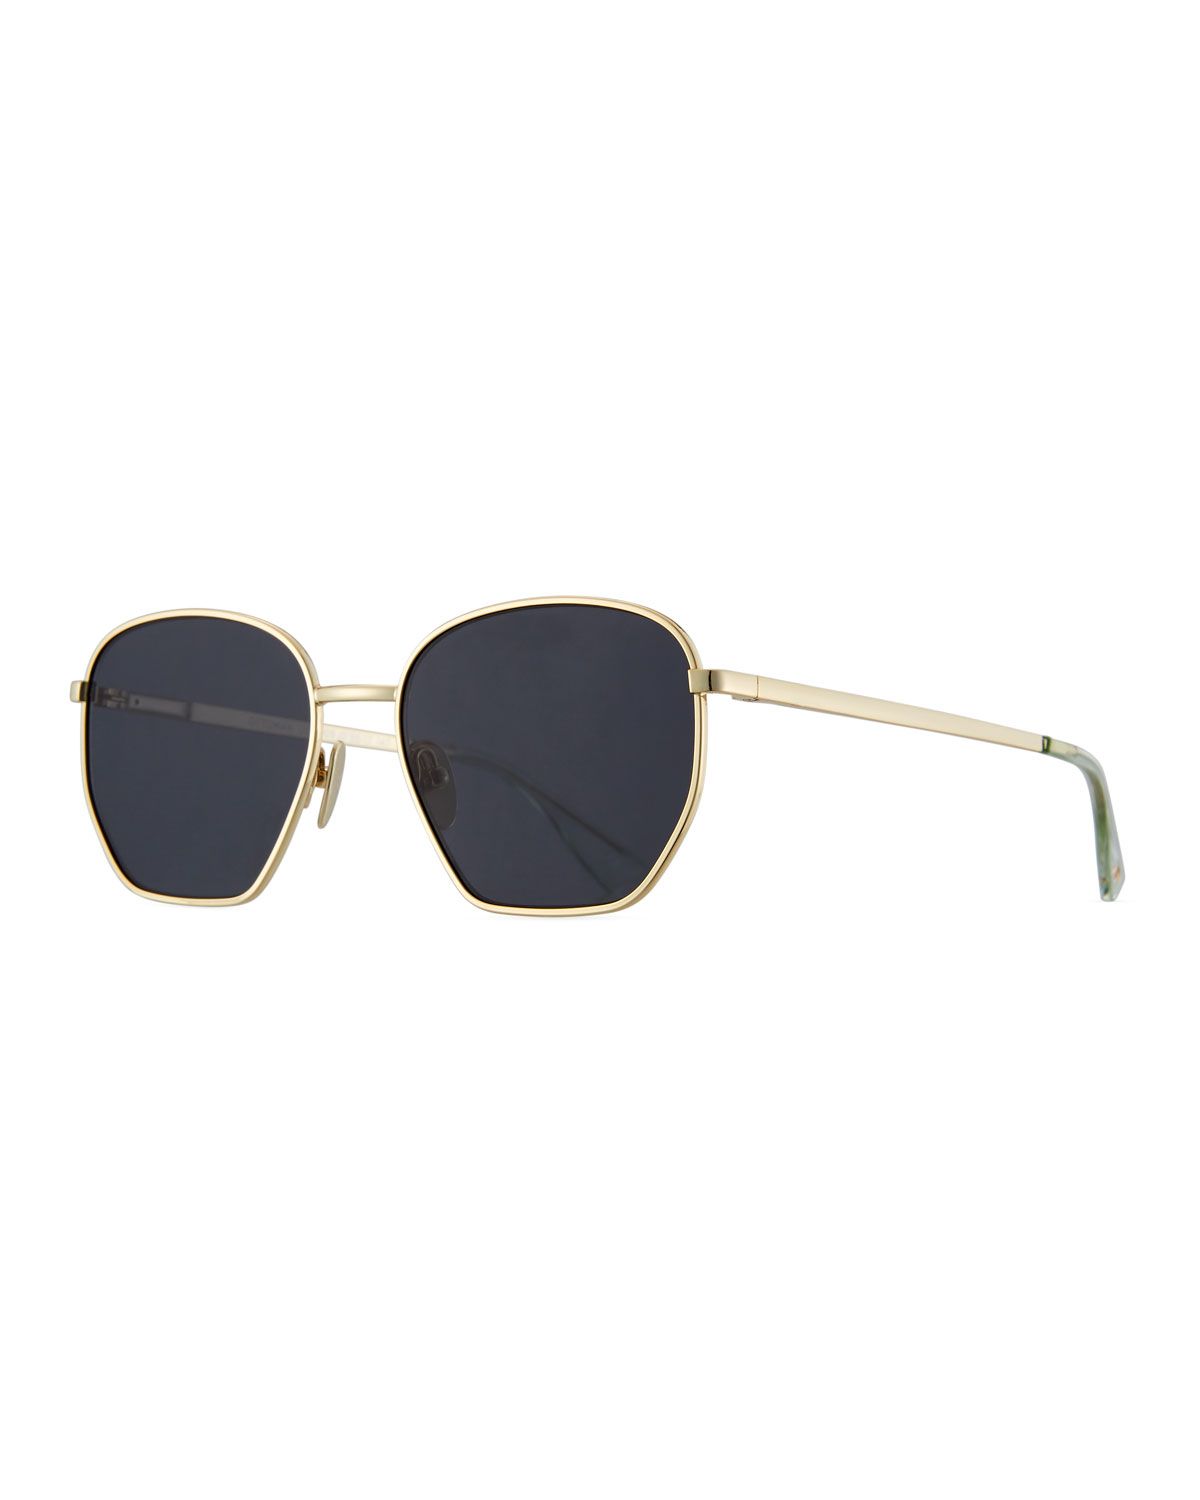 Ottoman Geometric Sunglasses, Black Nickel | Neiman Marcus